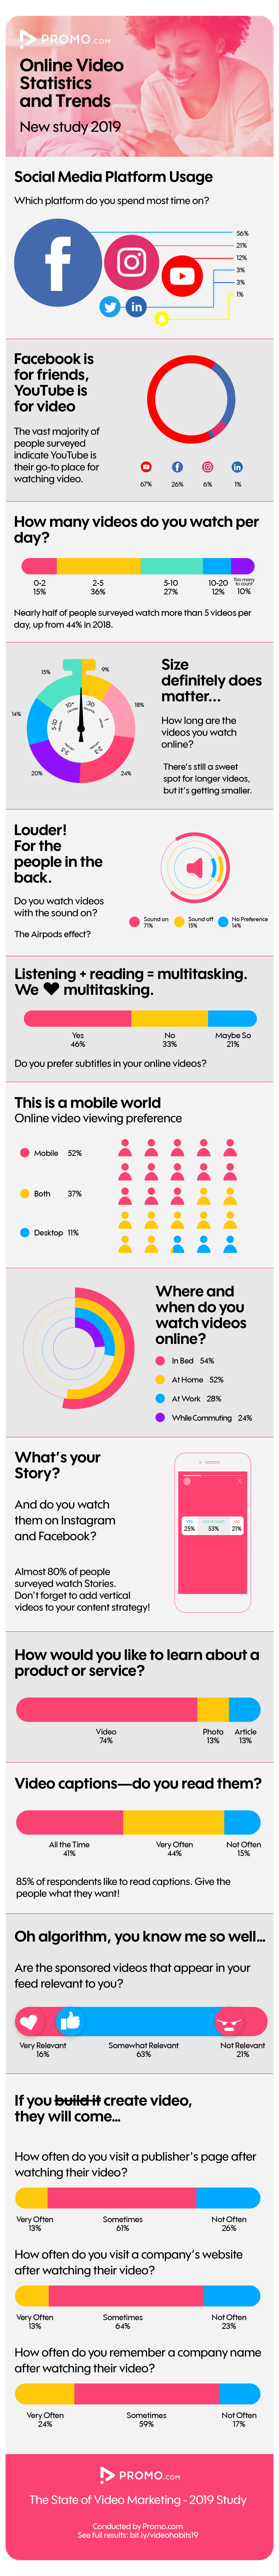 PROMO-video_trend_FULL_Infographic